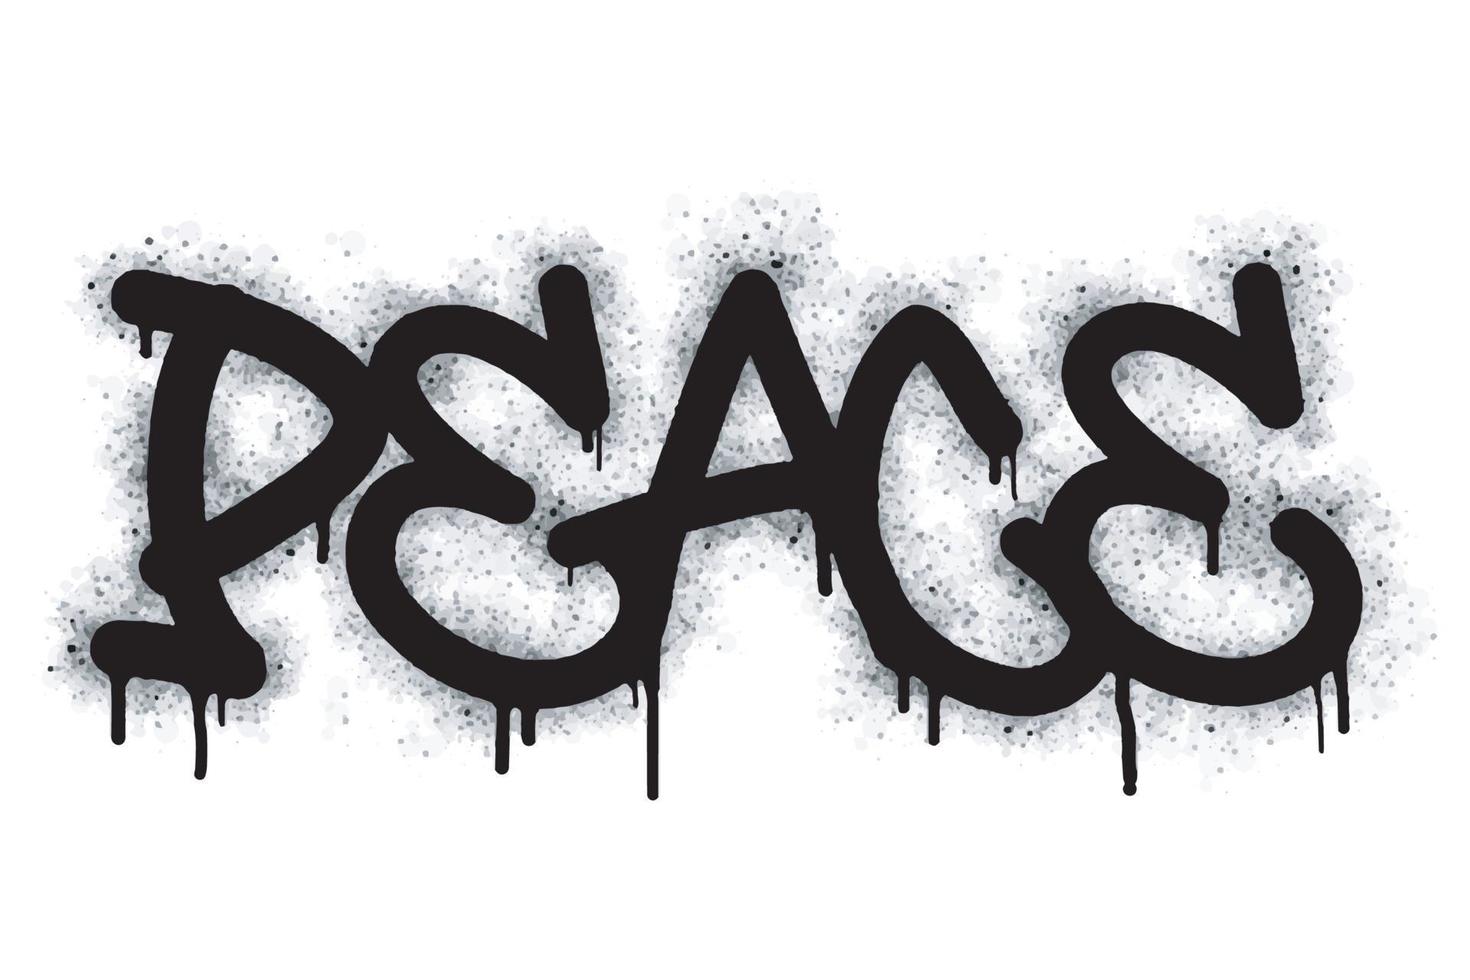 graffiti peace word and symbol sprayed in black vector